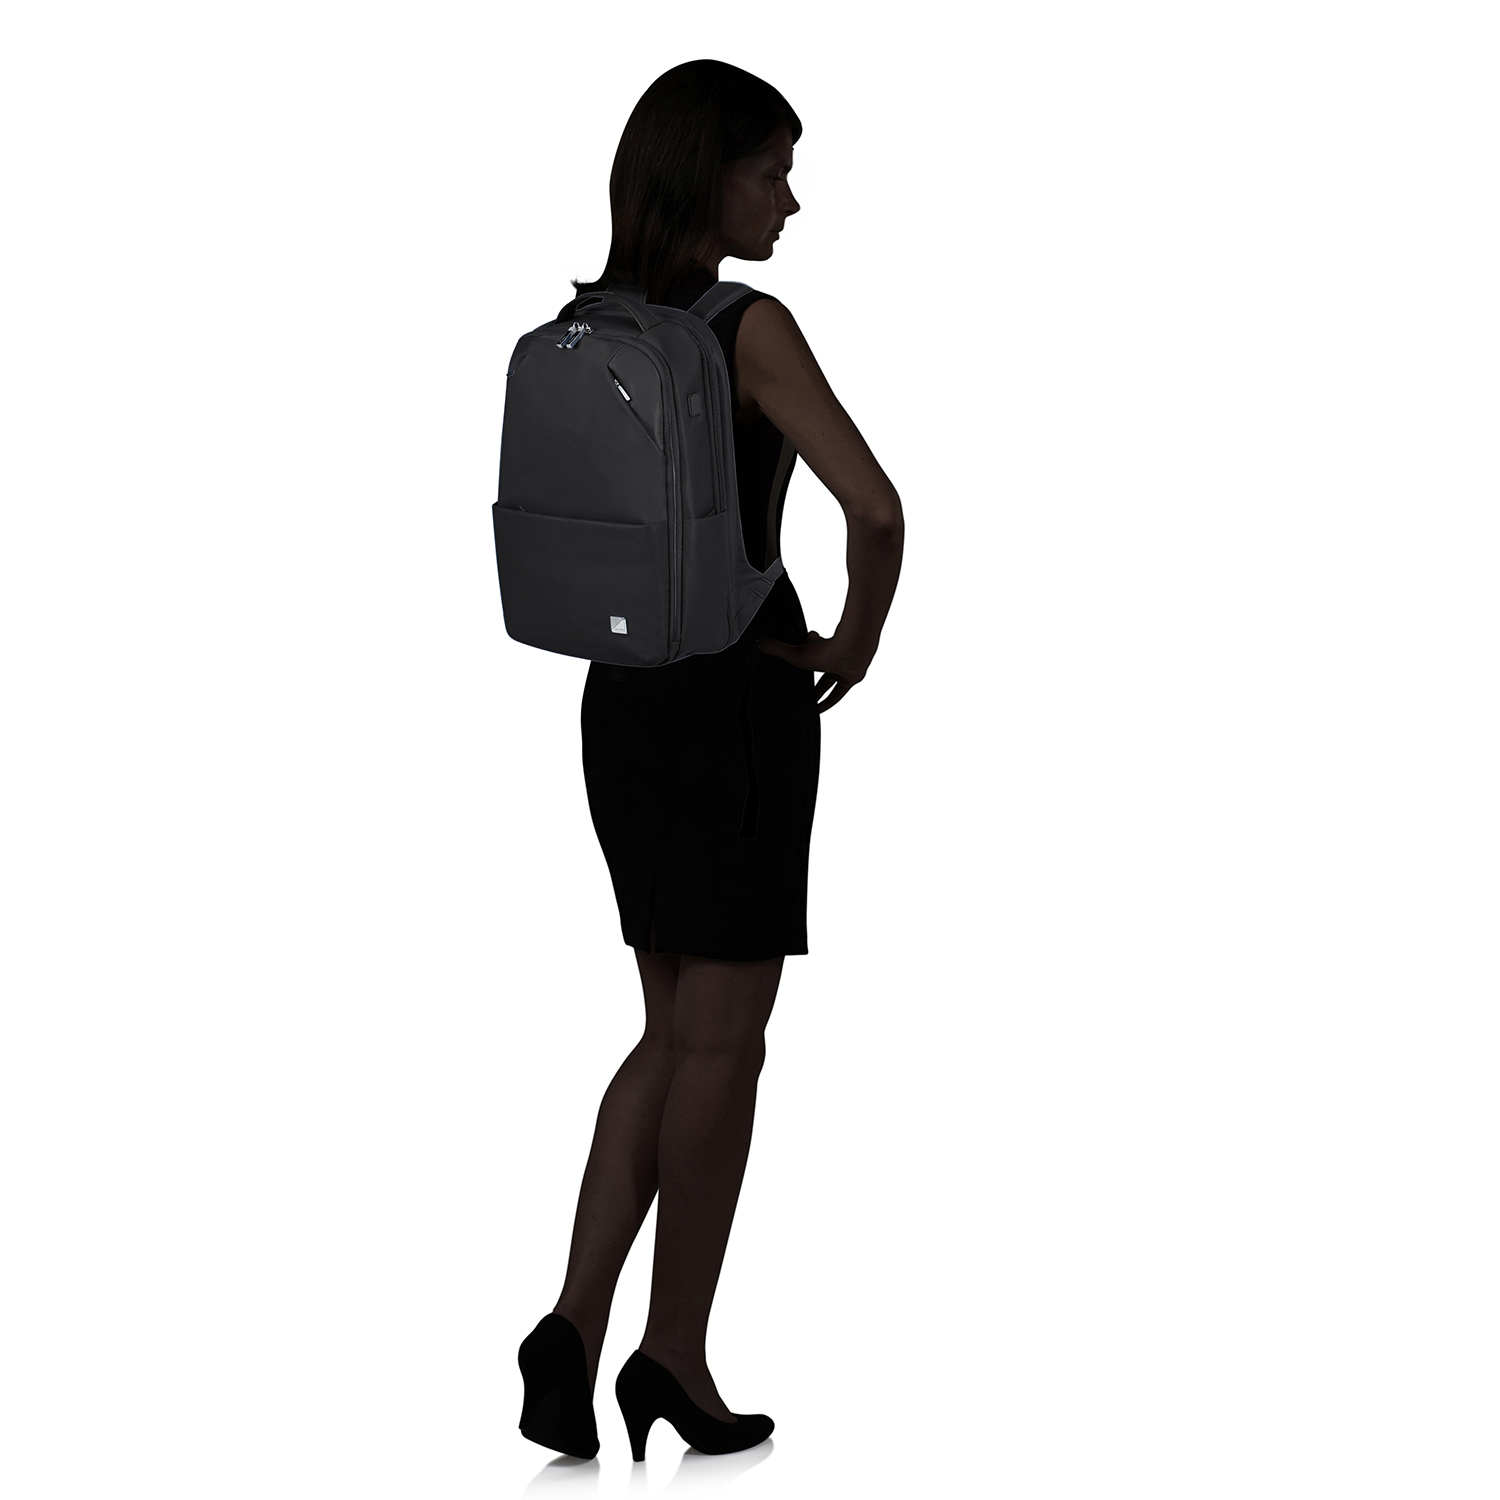 WORKATIONIST - Kıyafet Bölmeli Laptop Sırt Çantası 15.6'' SKI9-007-SF000*09